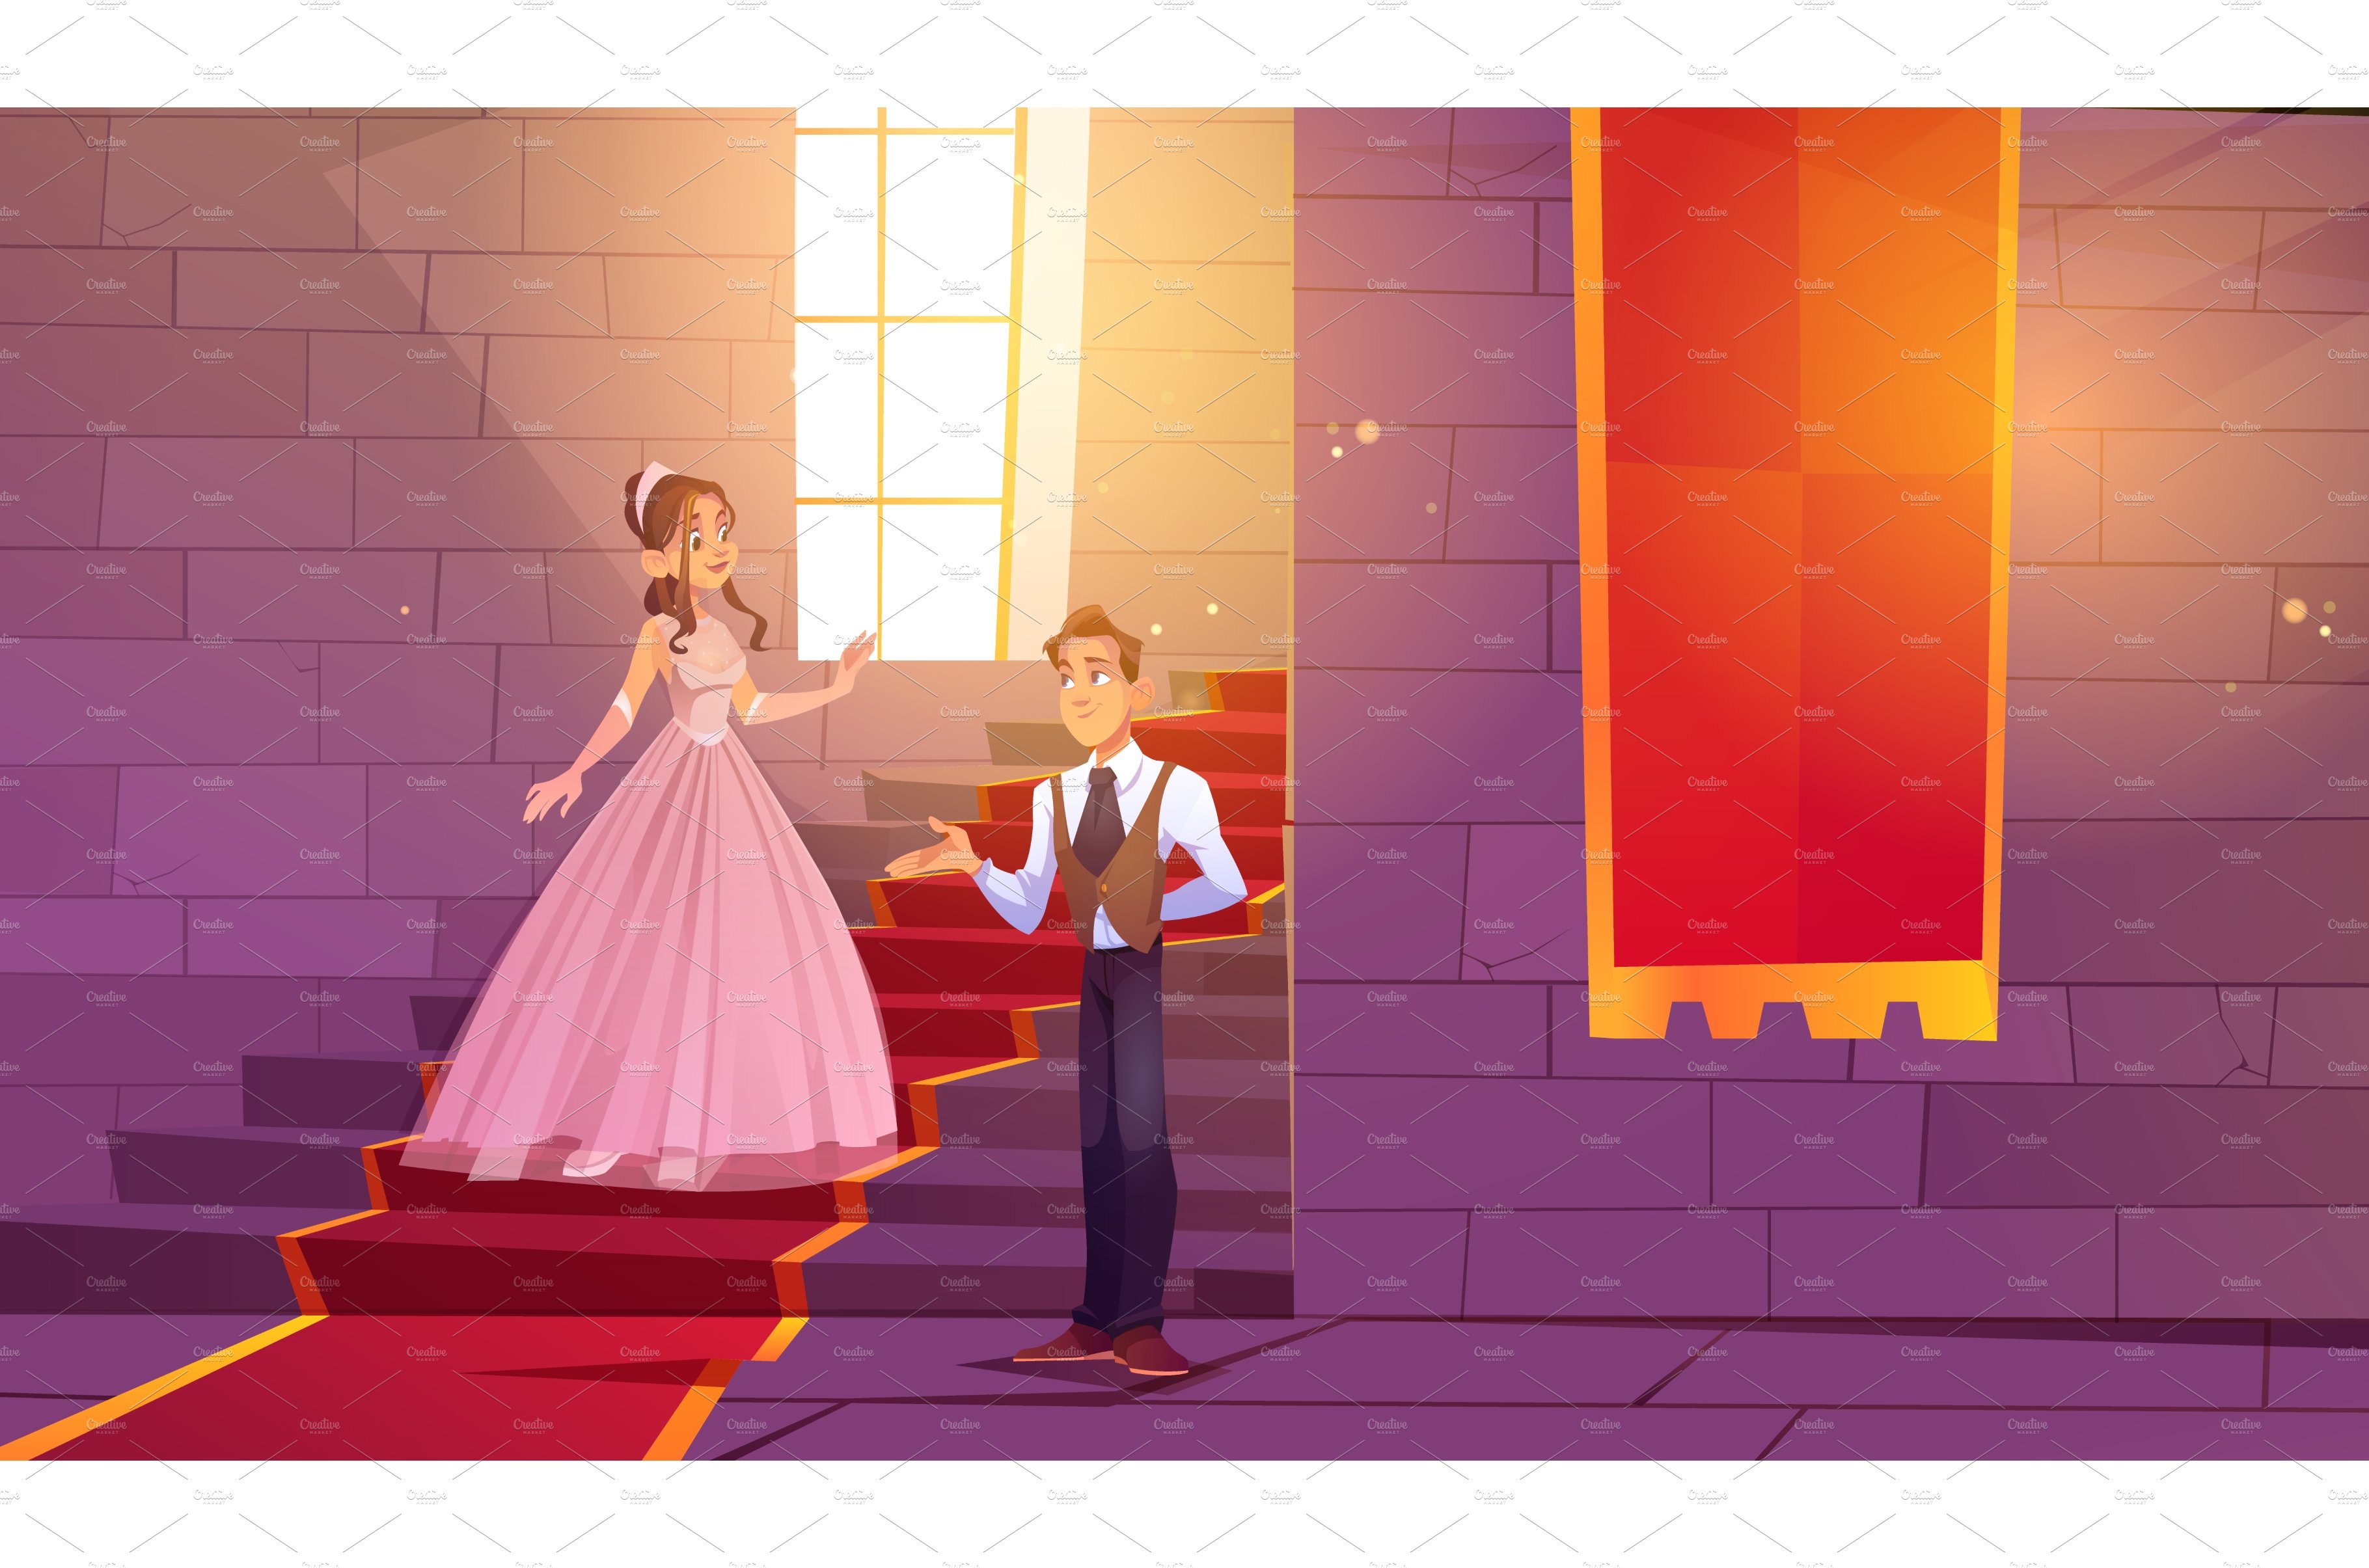 Prince invite princess for dance in cover image.